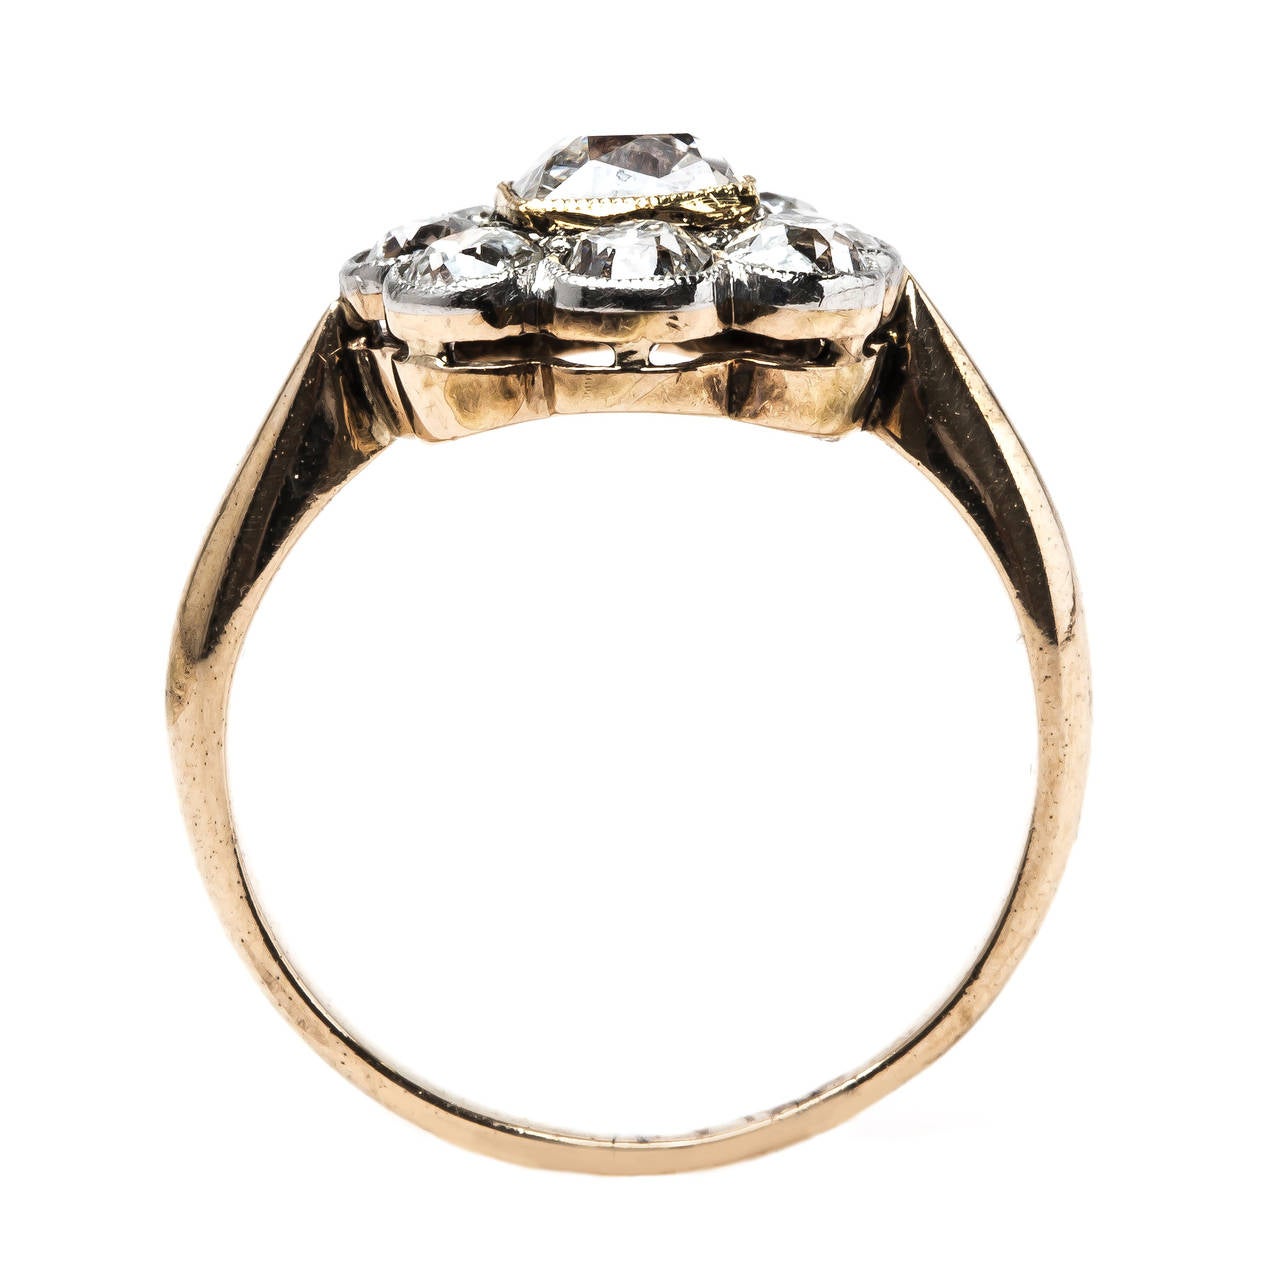 Women's Unique Victorian Era Halo Engagement Ring with Cushion Square Diamond Center